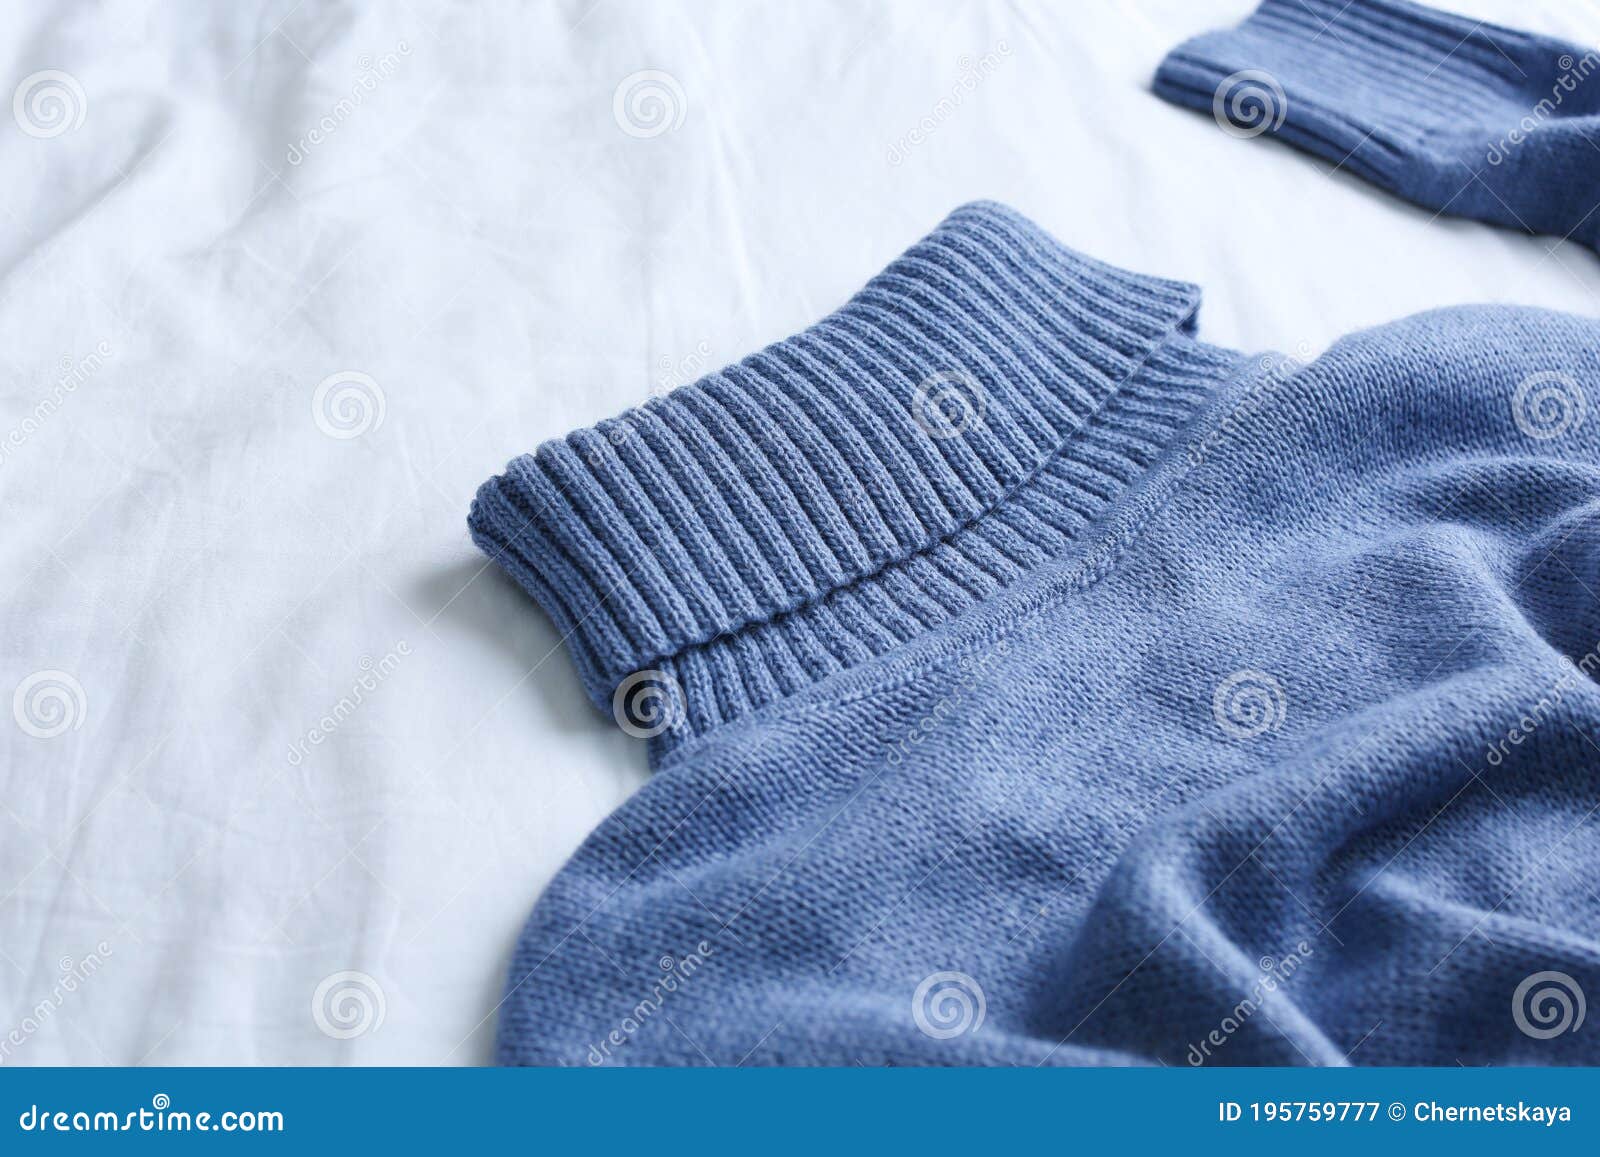 Blue Warm Sweater on White Crumpled Fabric, Closeup Stock Image - Image ...